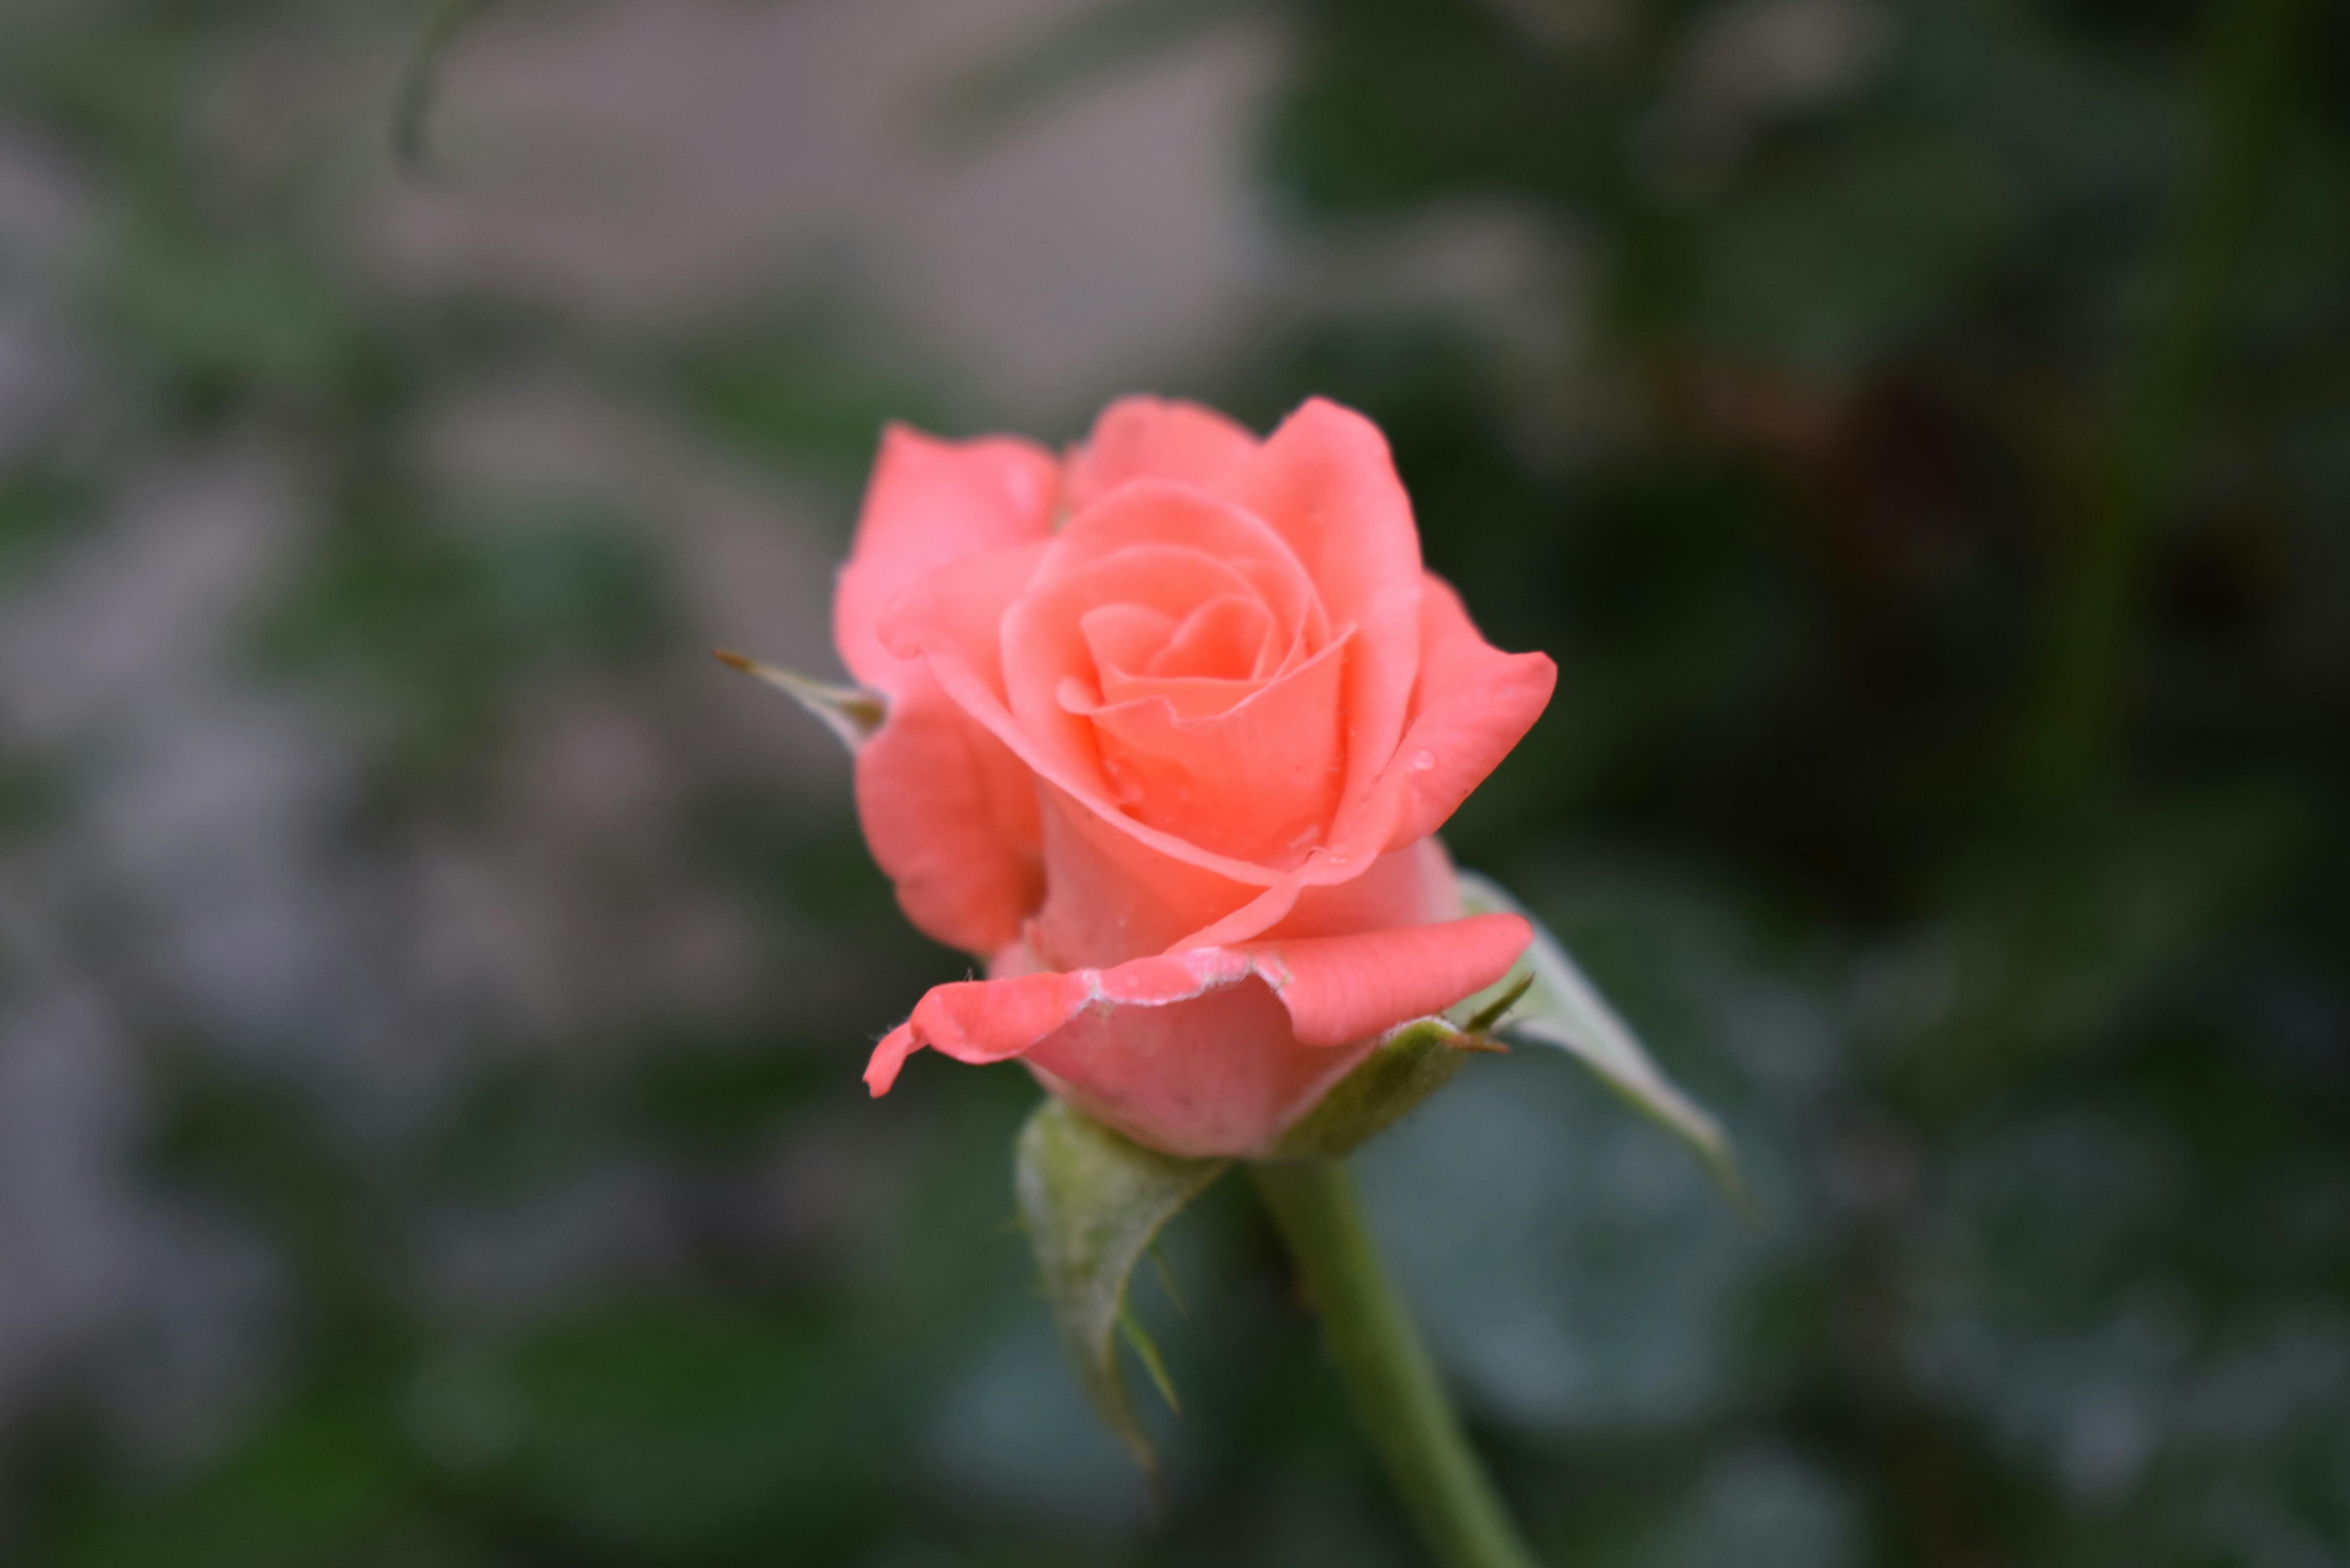 Free stock photo of Peach Rose, rose, rose bloom